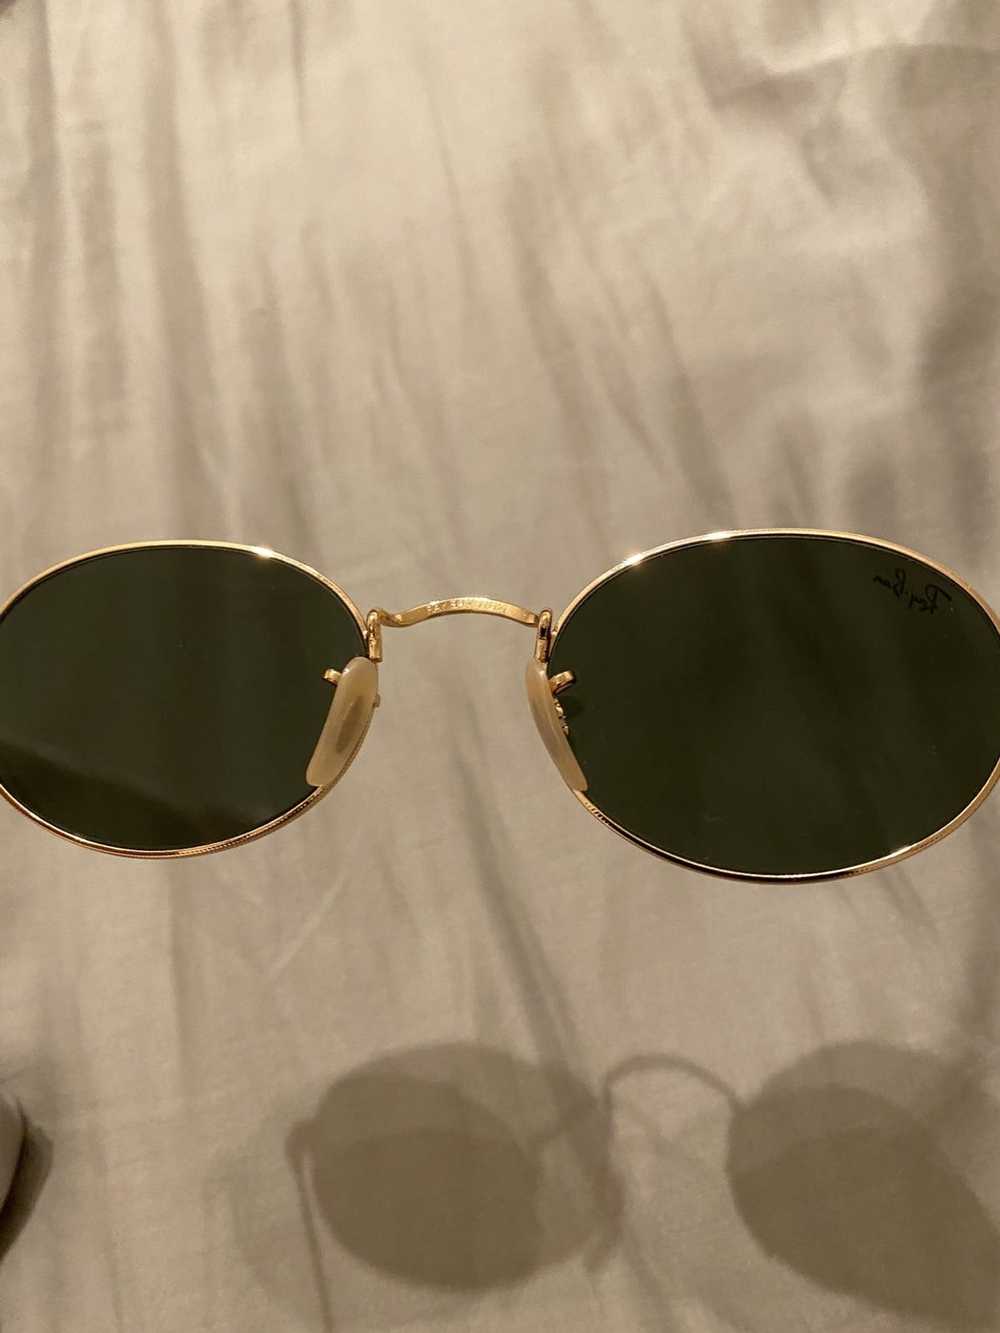 RayBan Ray Ban Gold Flat Oval Sunglasses - image 8